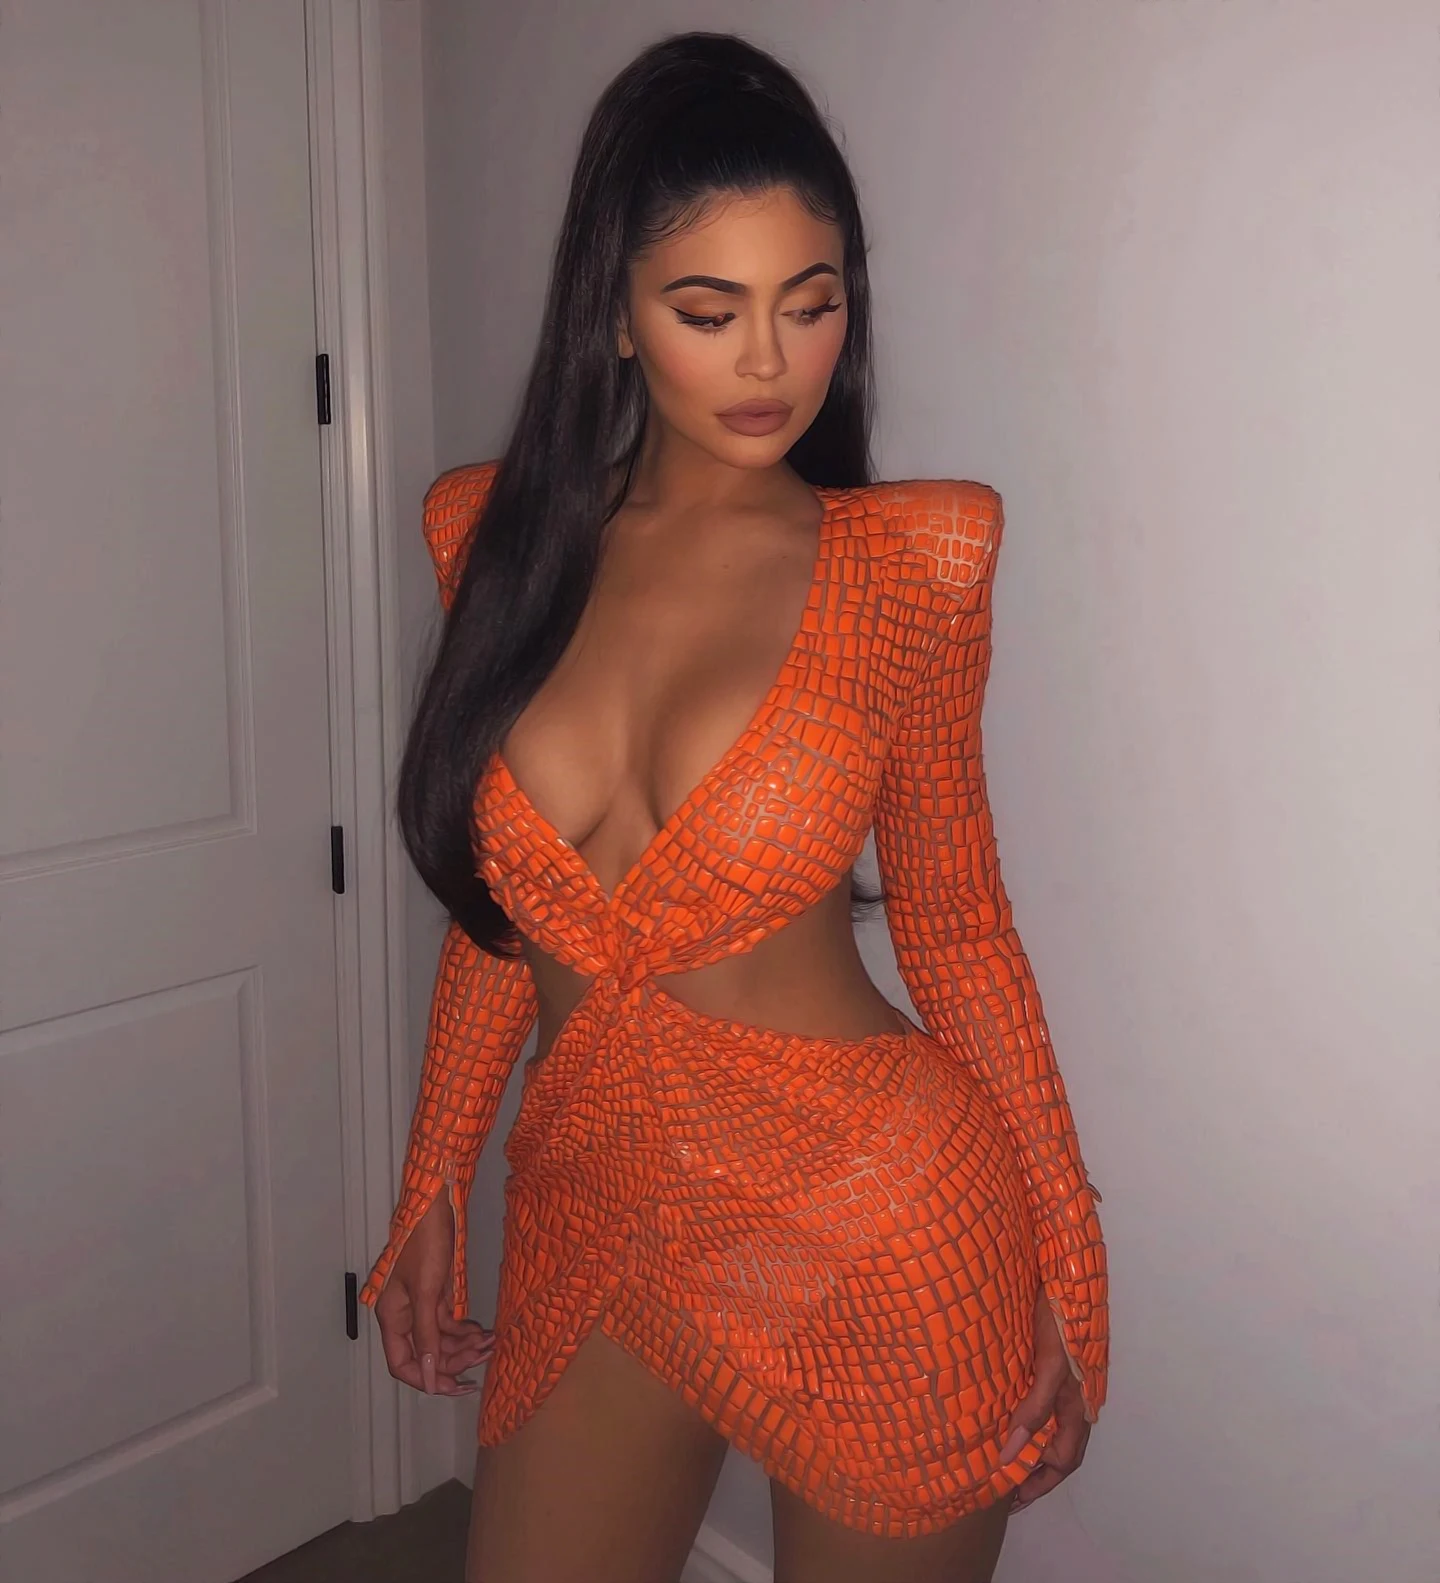 Kylier Jenner see through Orange dress hd image